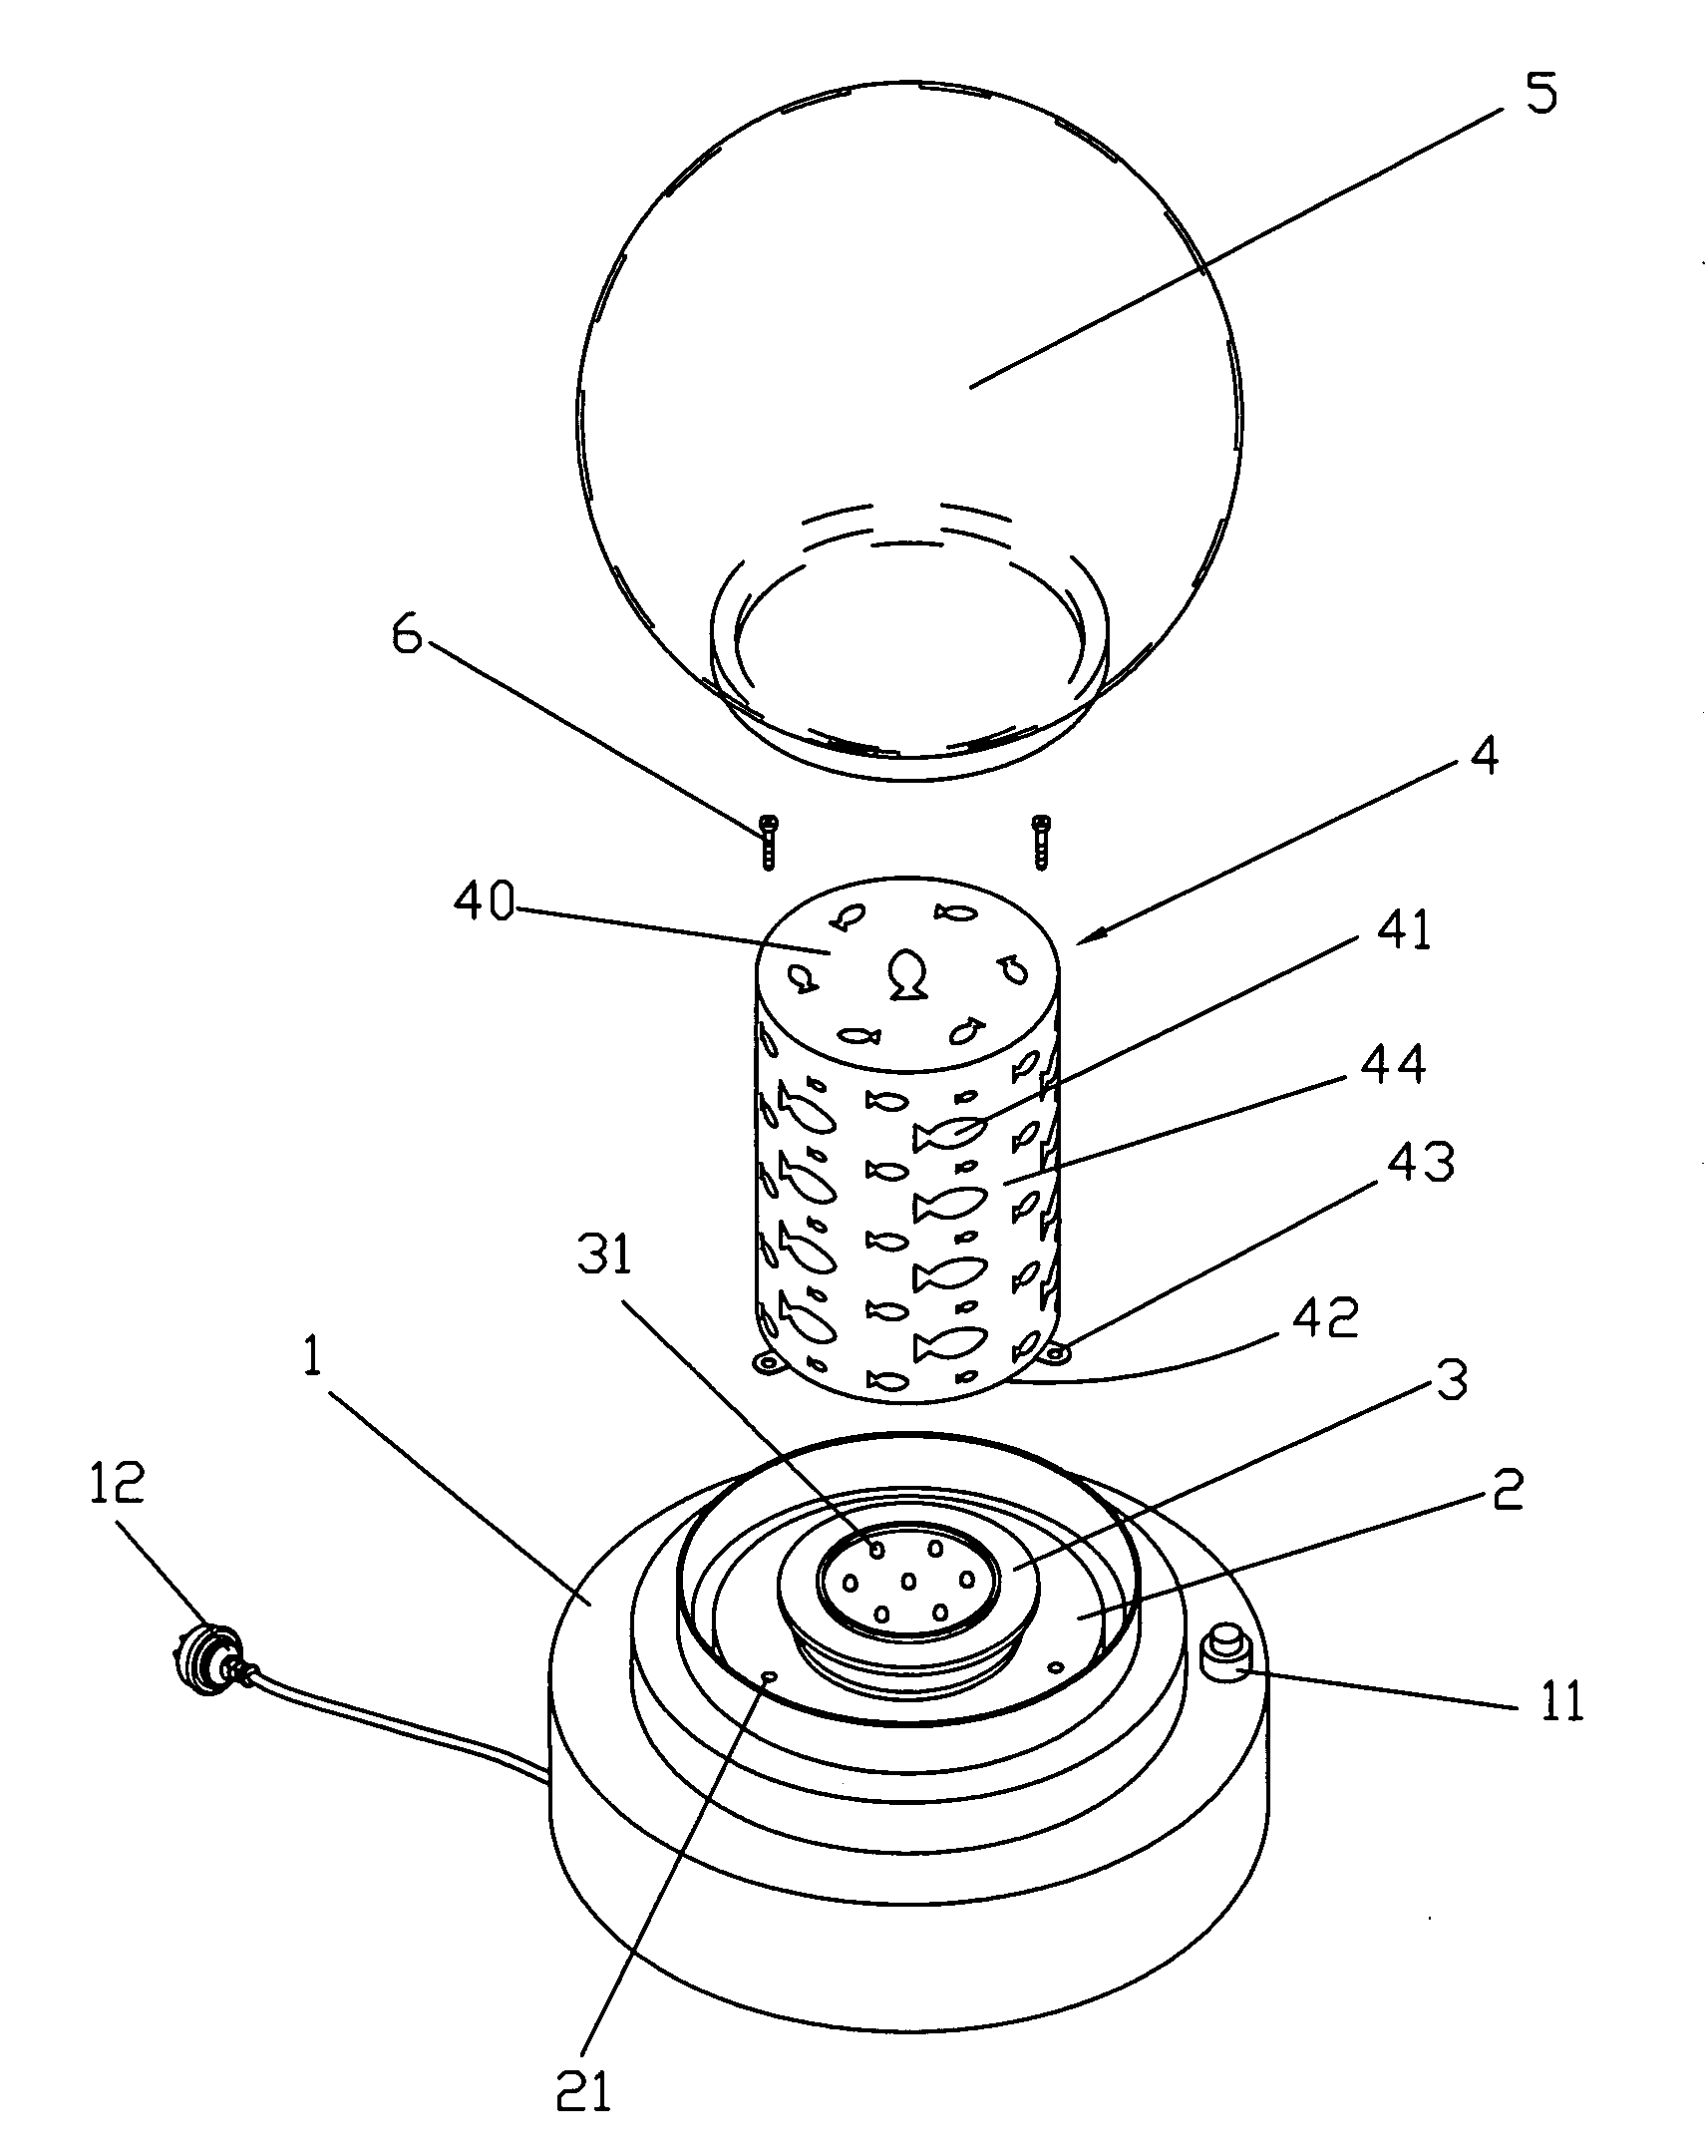 Lamp having rotatable patterns